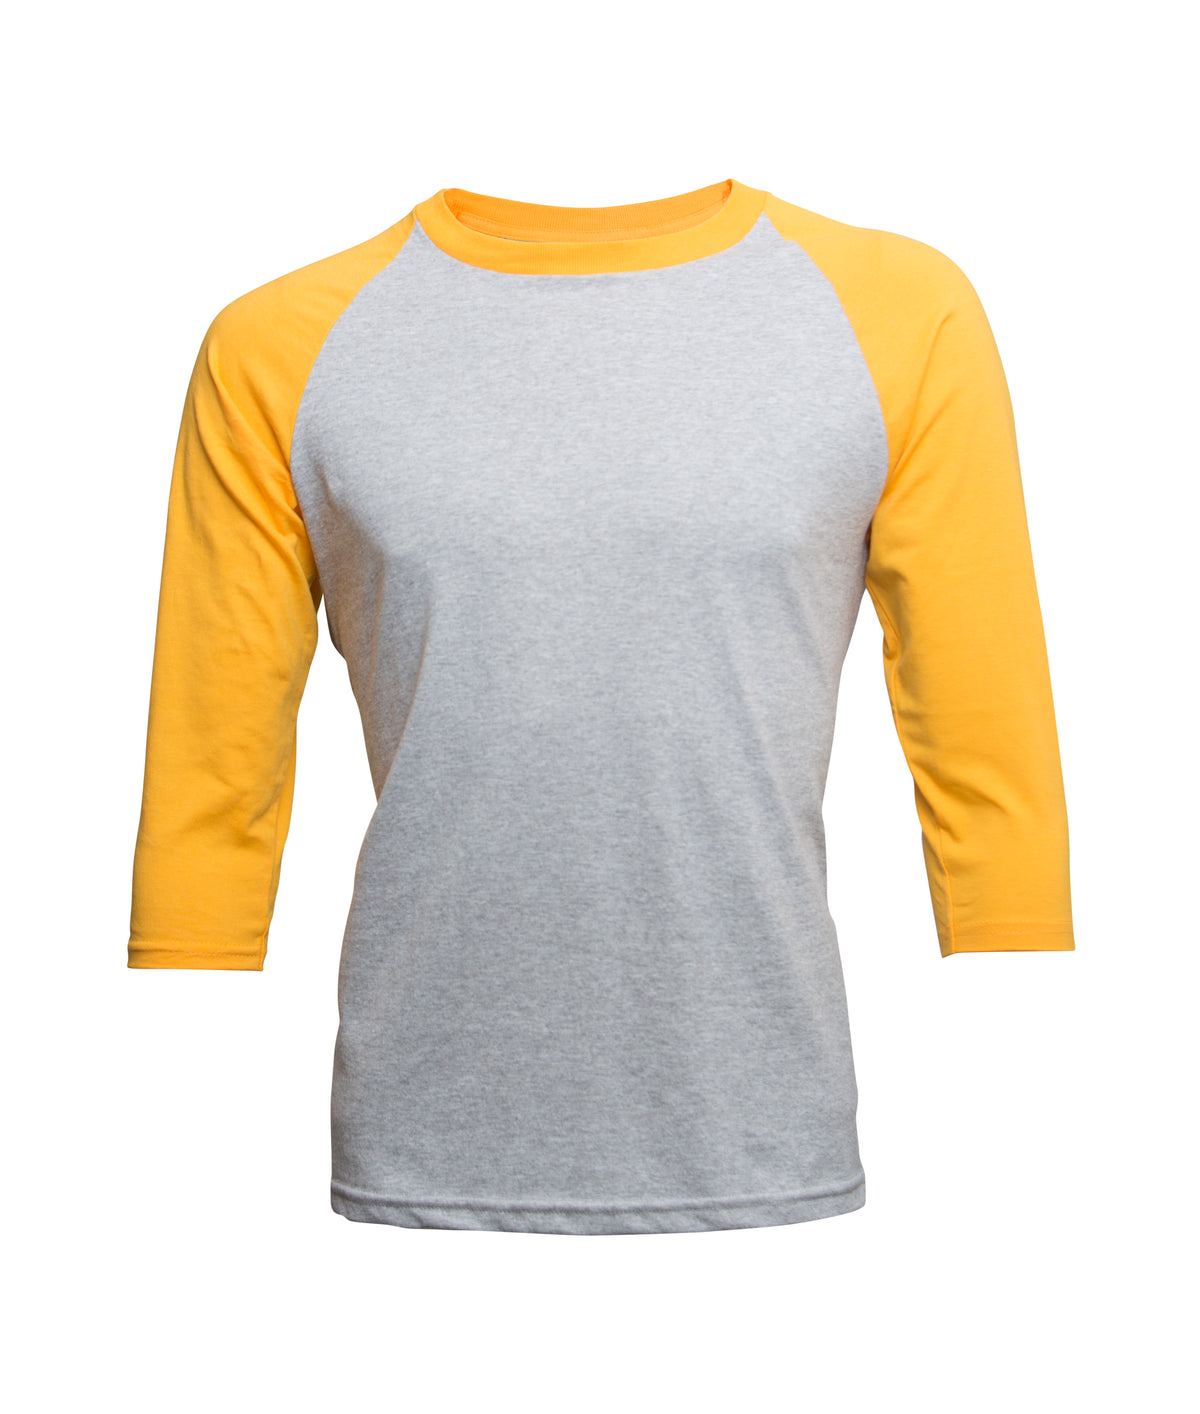 TheLovely Men & Women Unisex Short Sleeve Baseball Raglan Tee Shirt Top